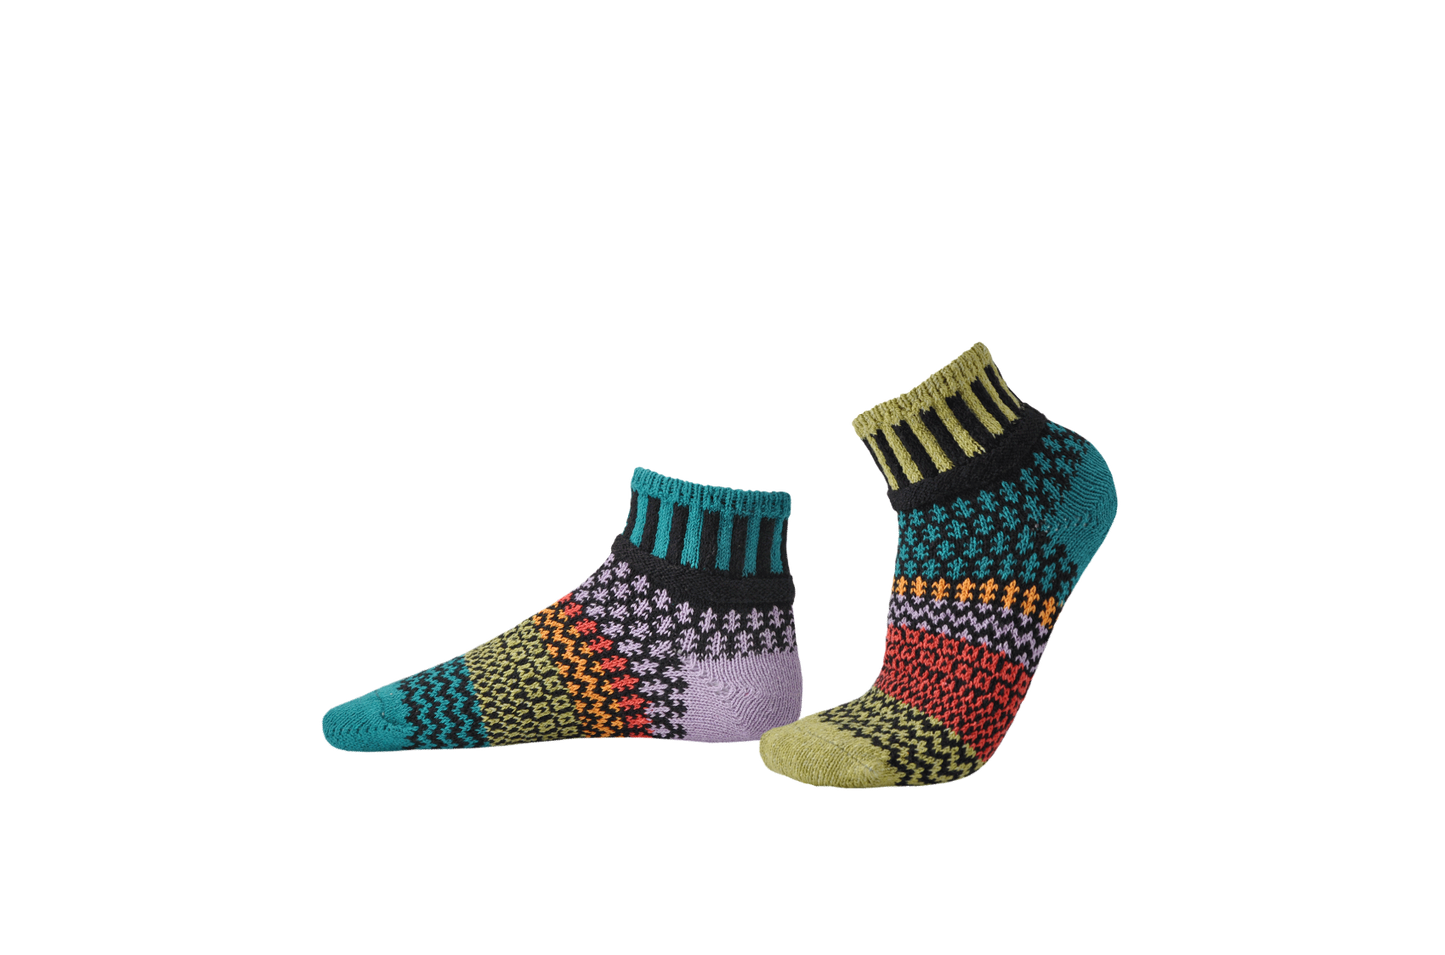 Artichoke Quarter Socks